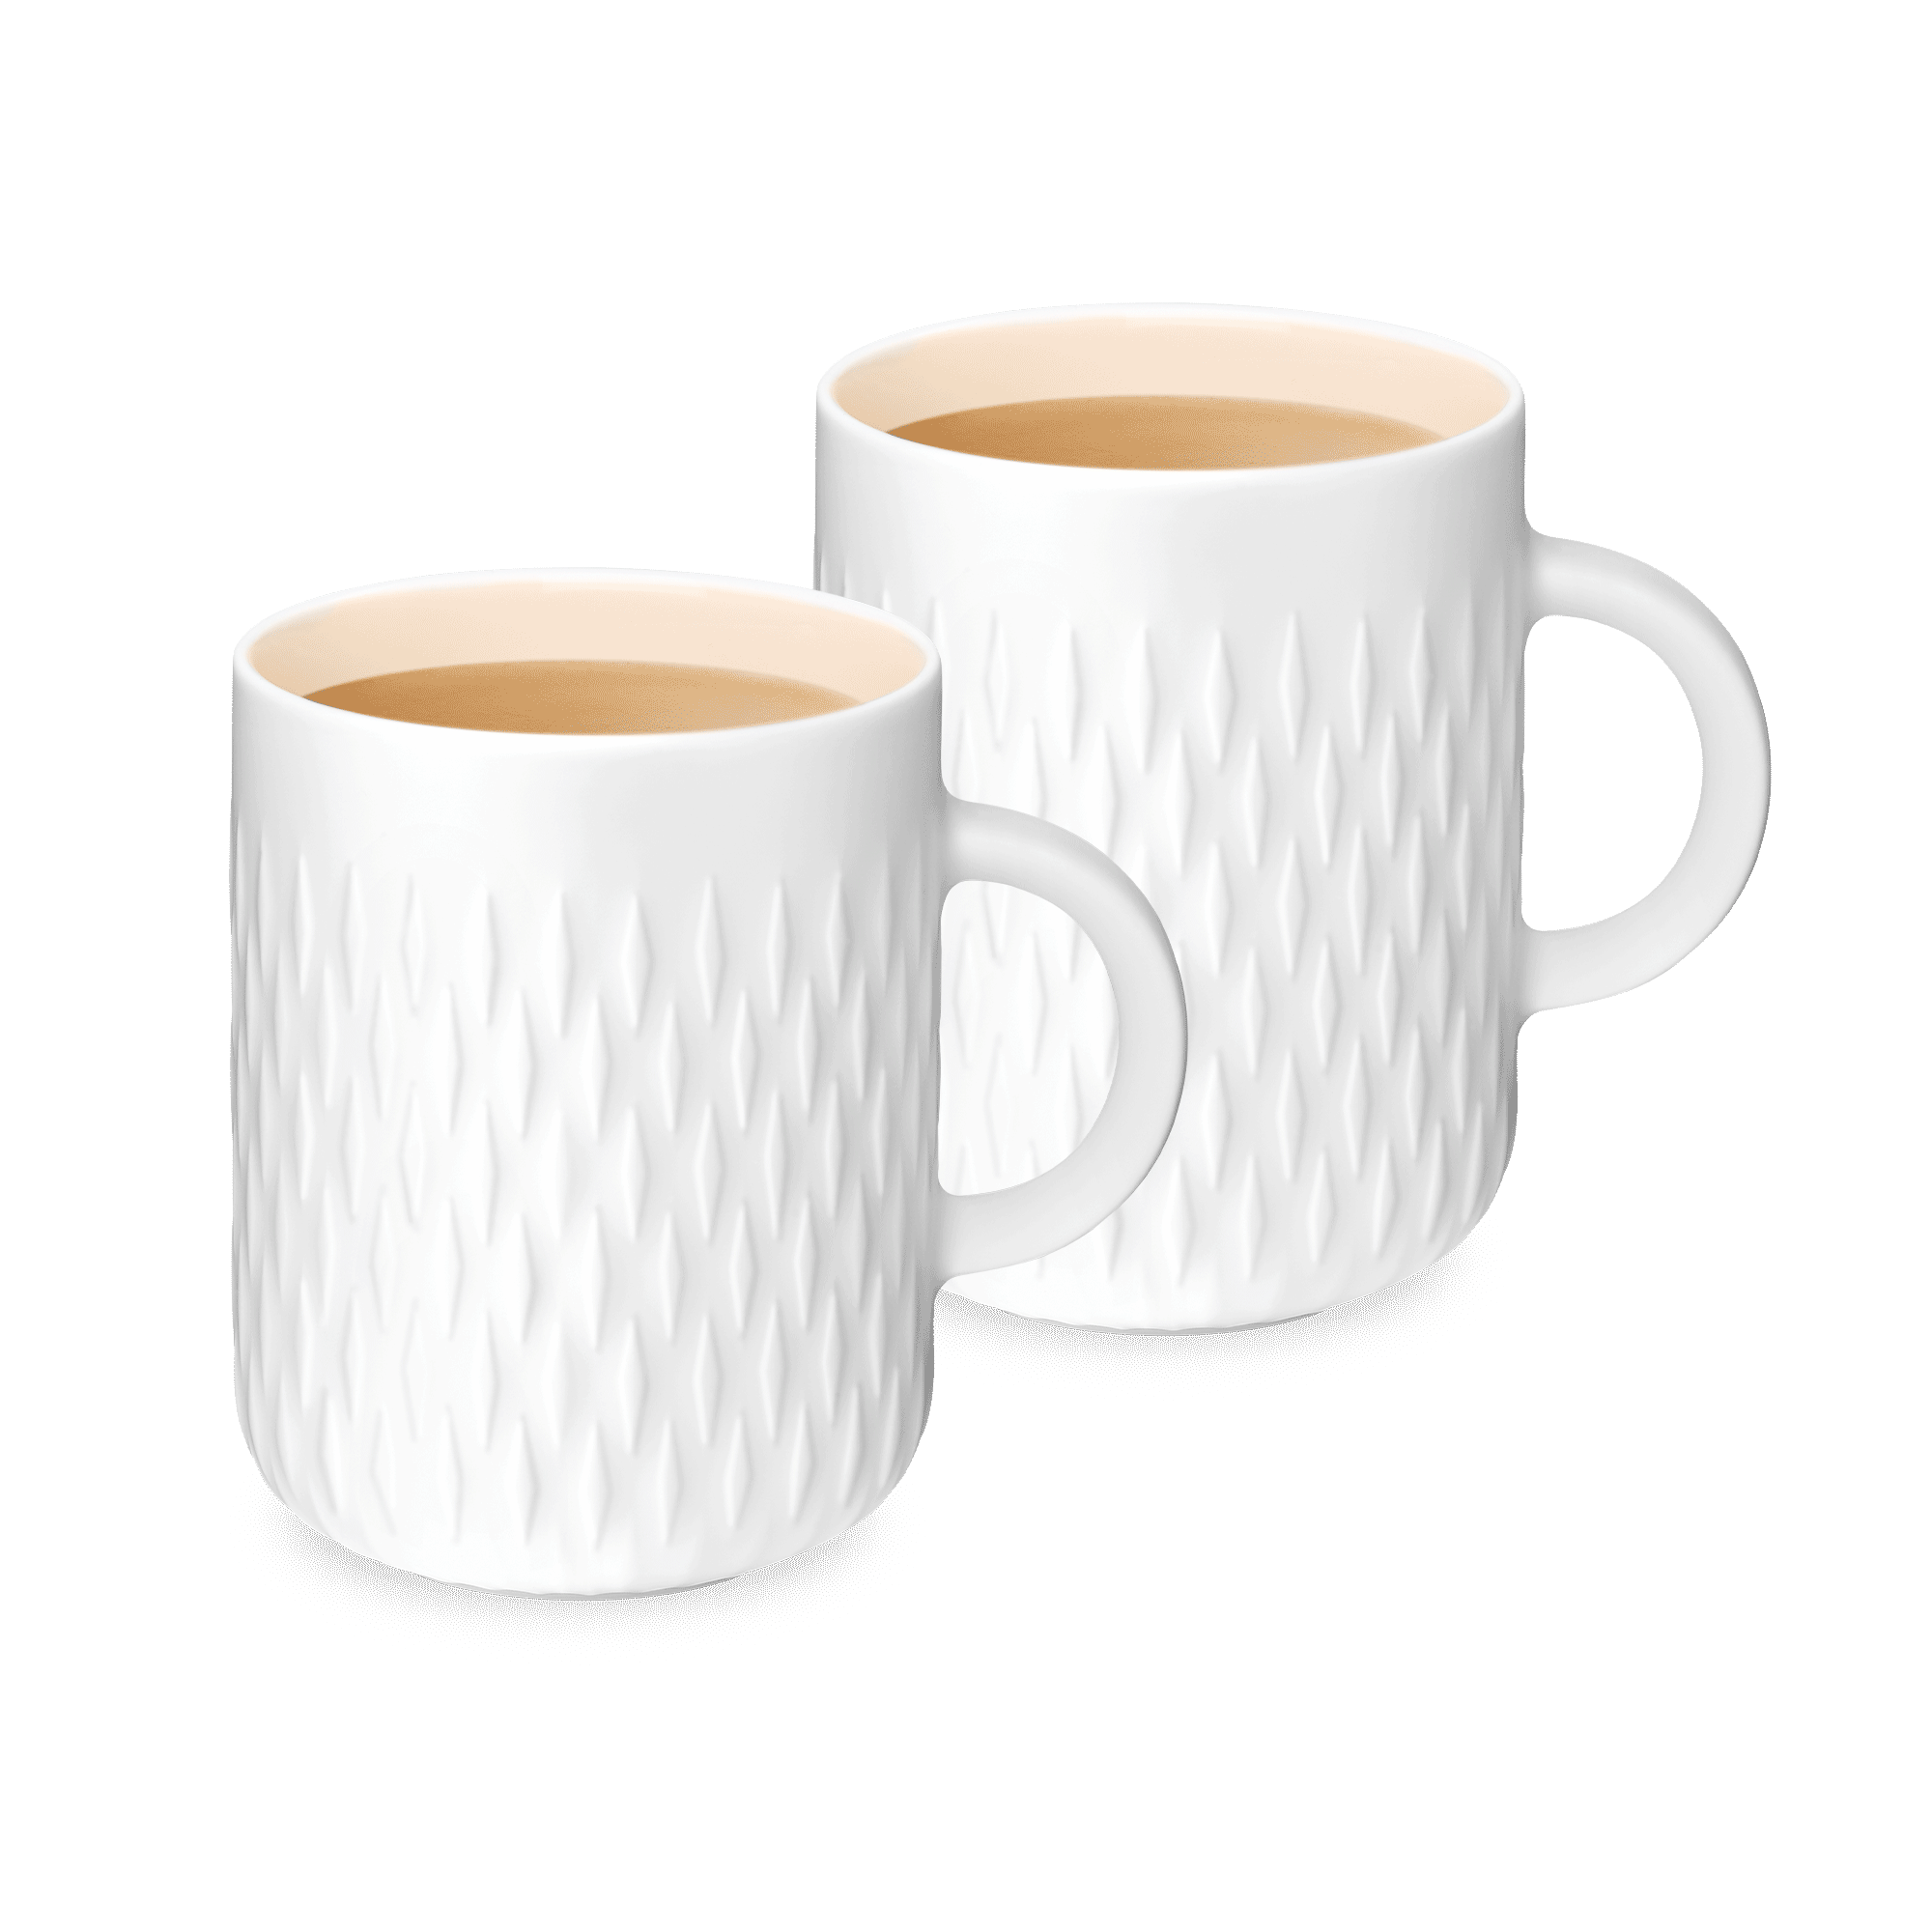 Limited Edition Porcelain Mugs